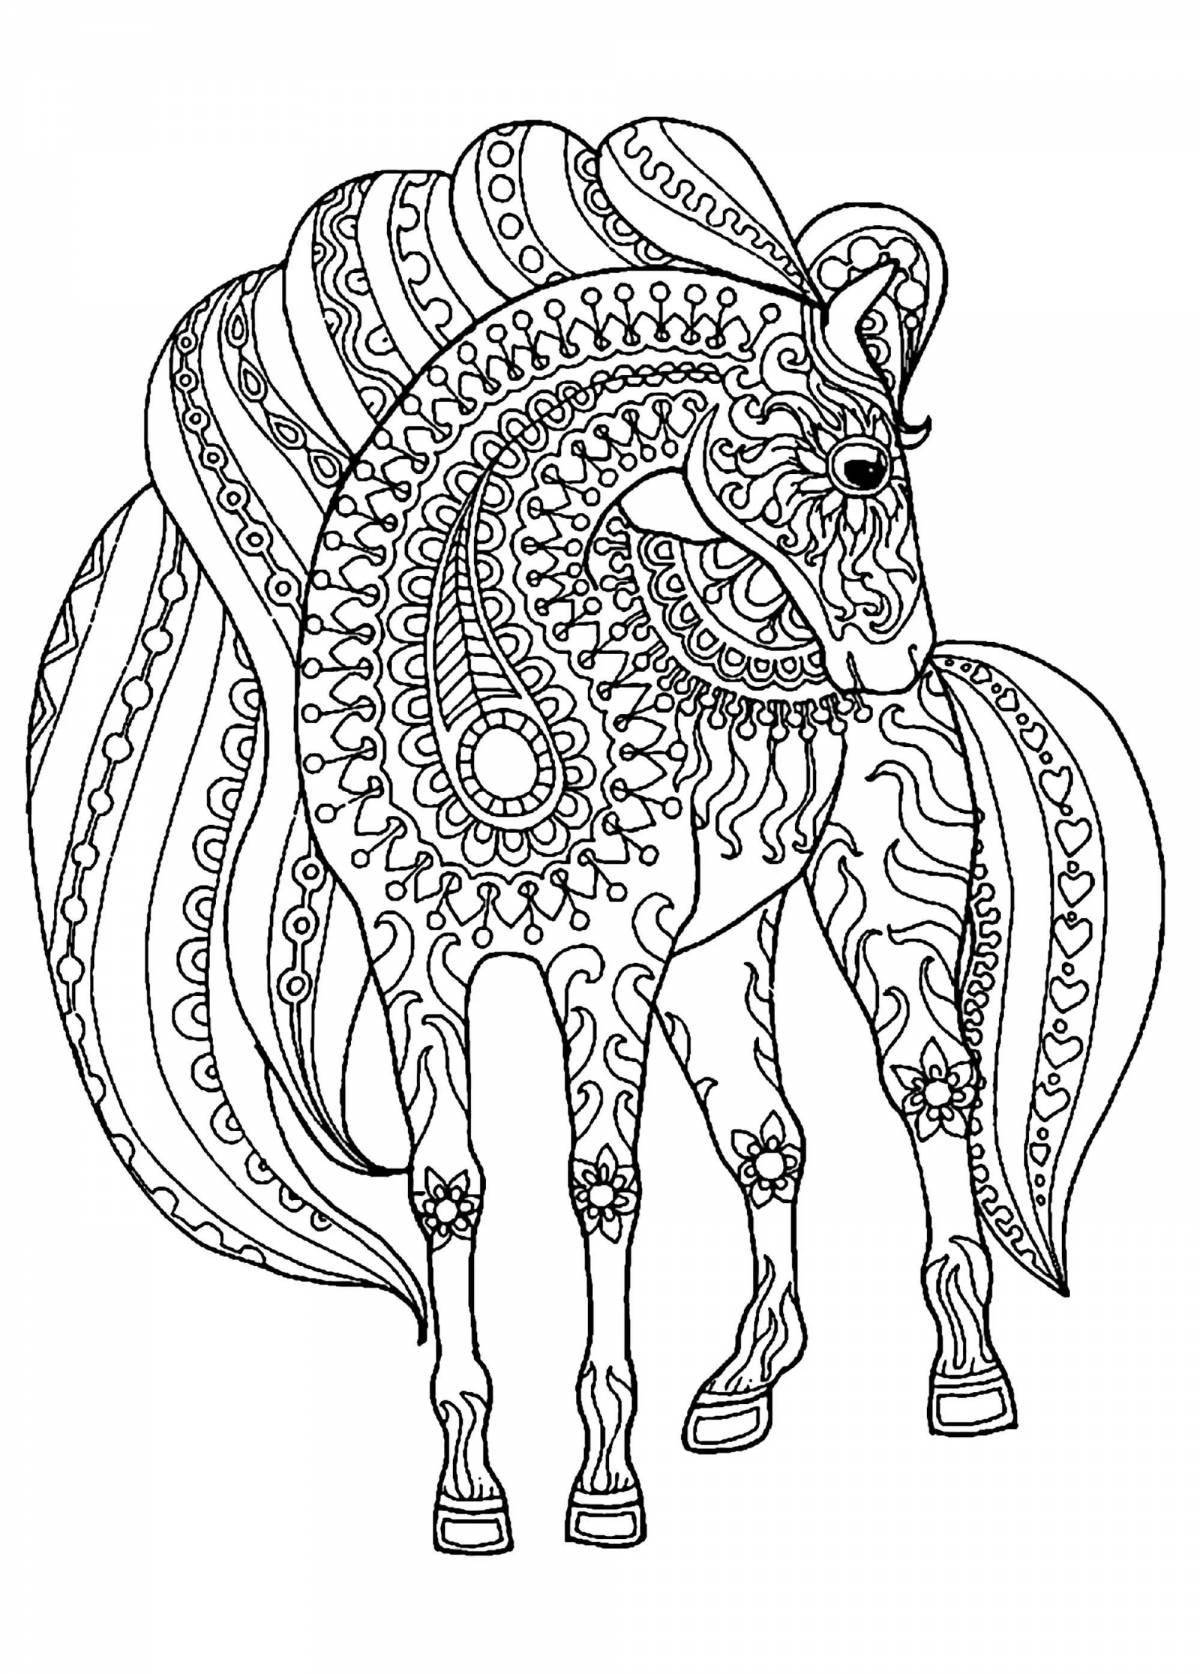 Подробная раскраска животных с рисунком